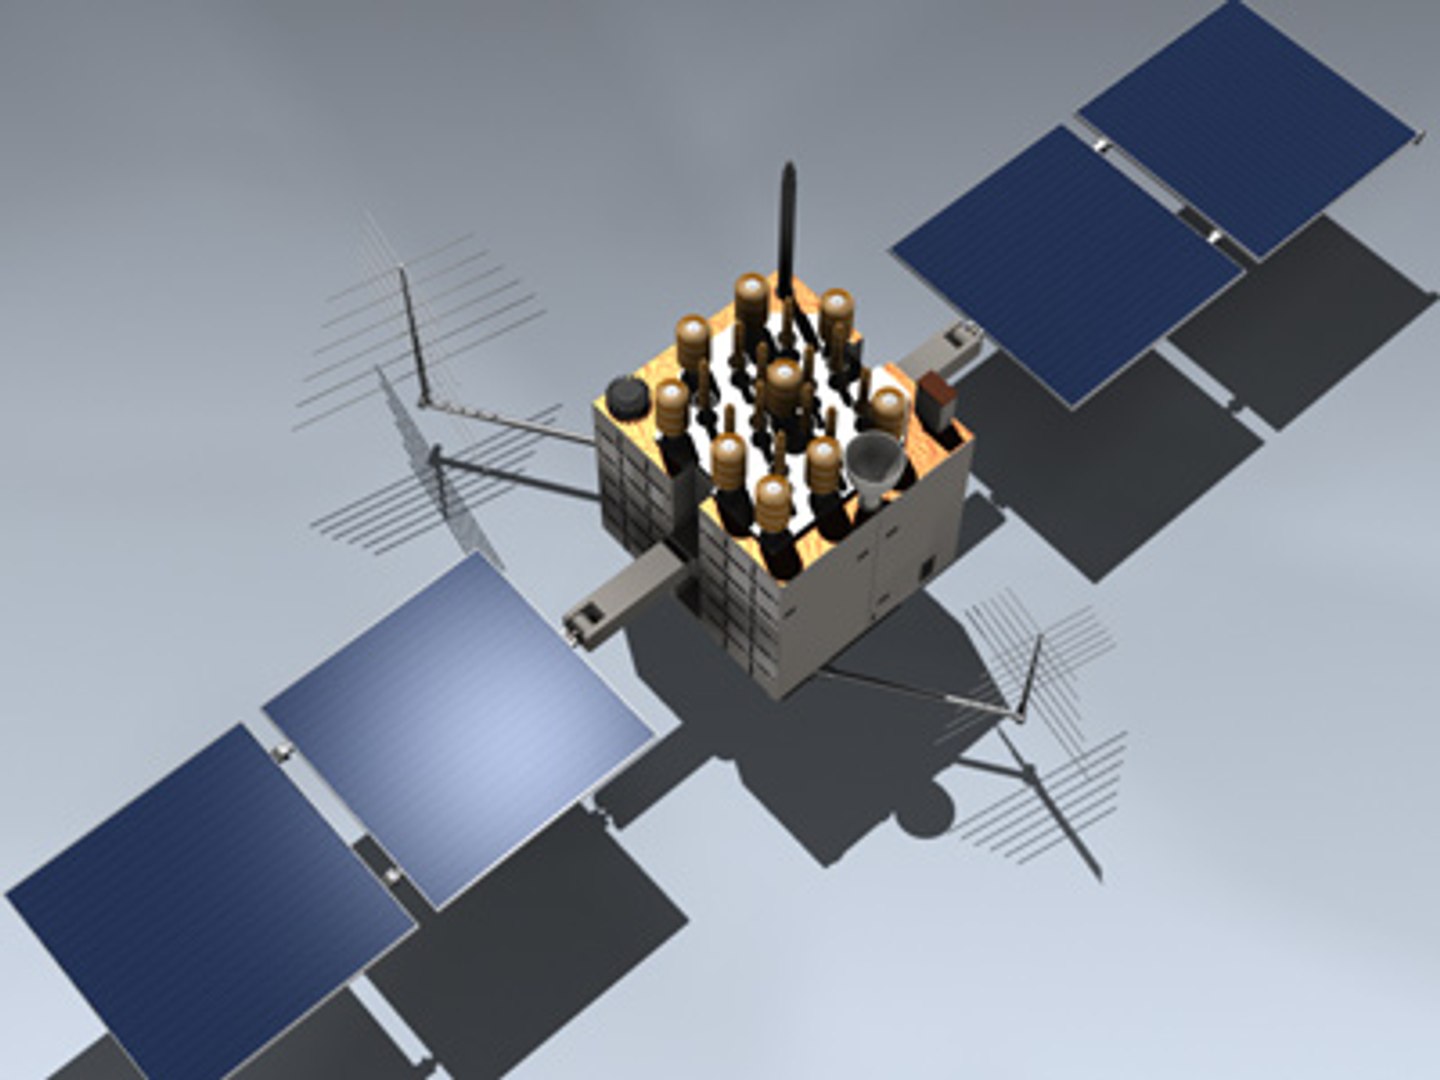 Спутник д. Satellite 3d model. Спутник GPS 3d модель. Спутник для связи 3д. ИСЗ Луч 3d модель.